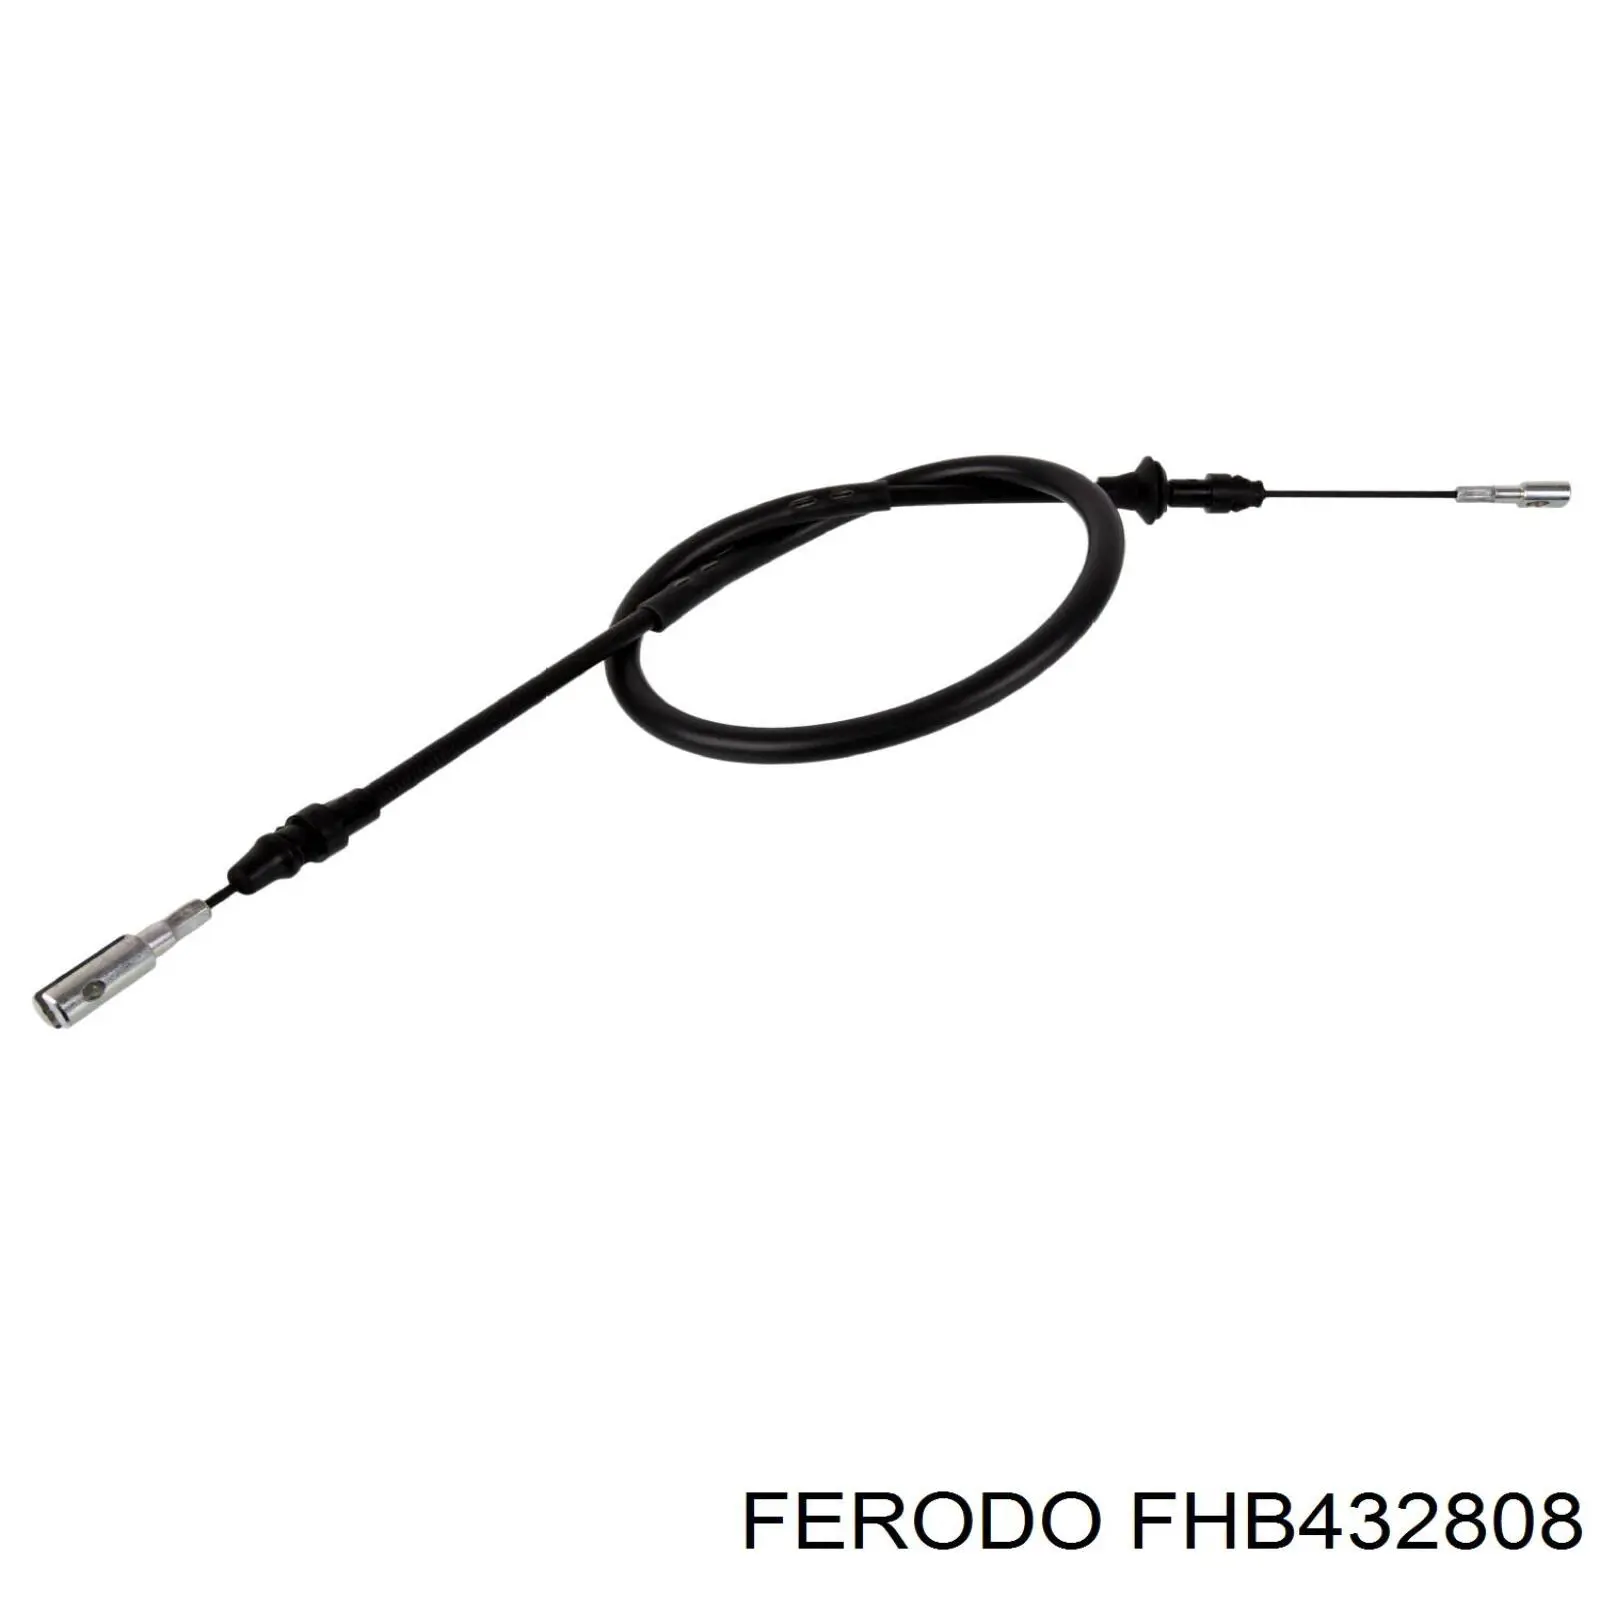 Cable de freno de mano delantero FHB432808 Ferodo